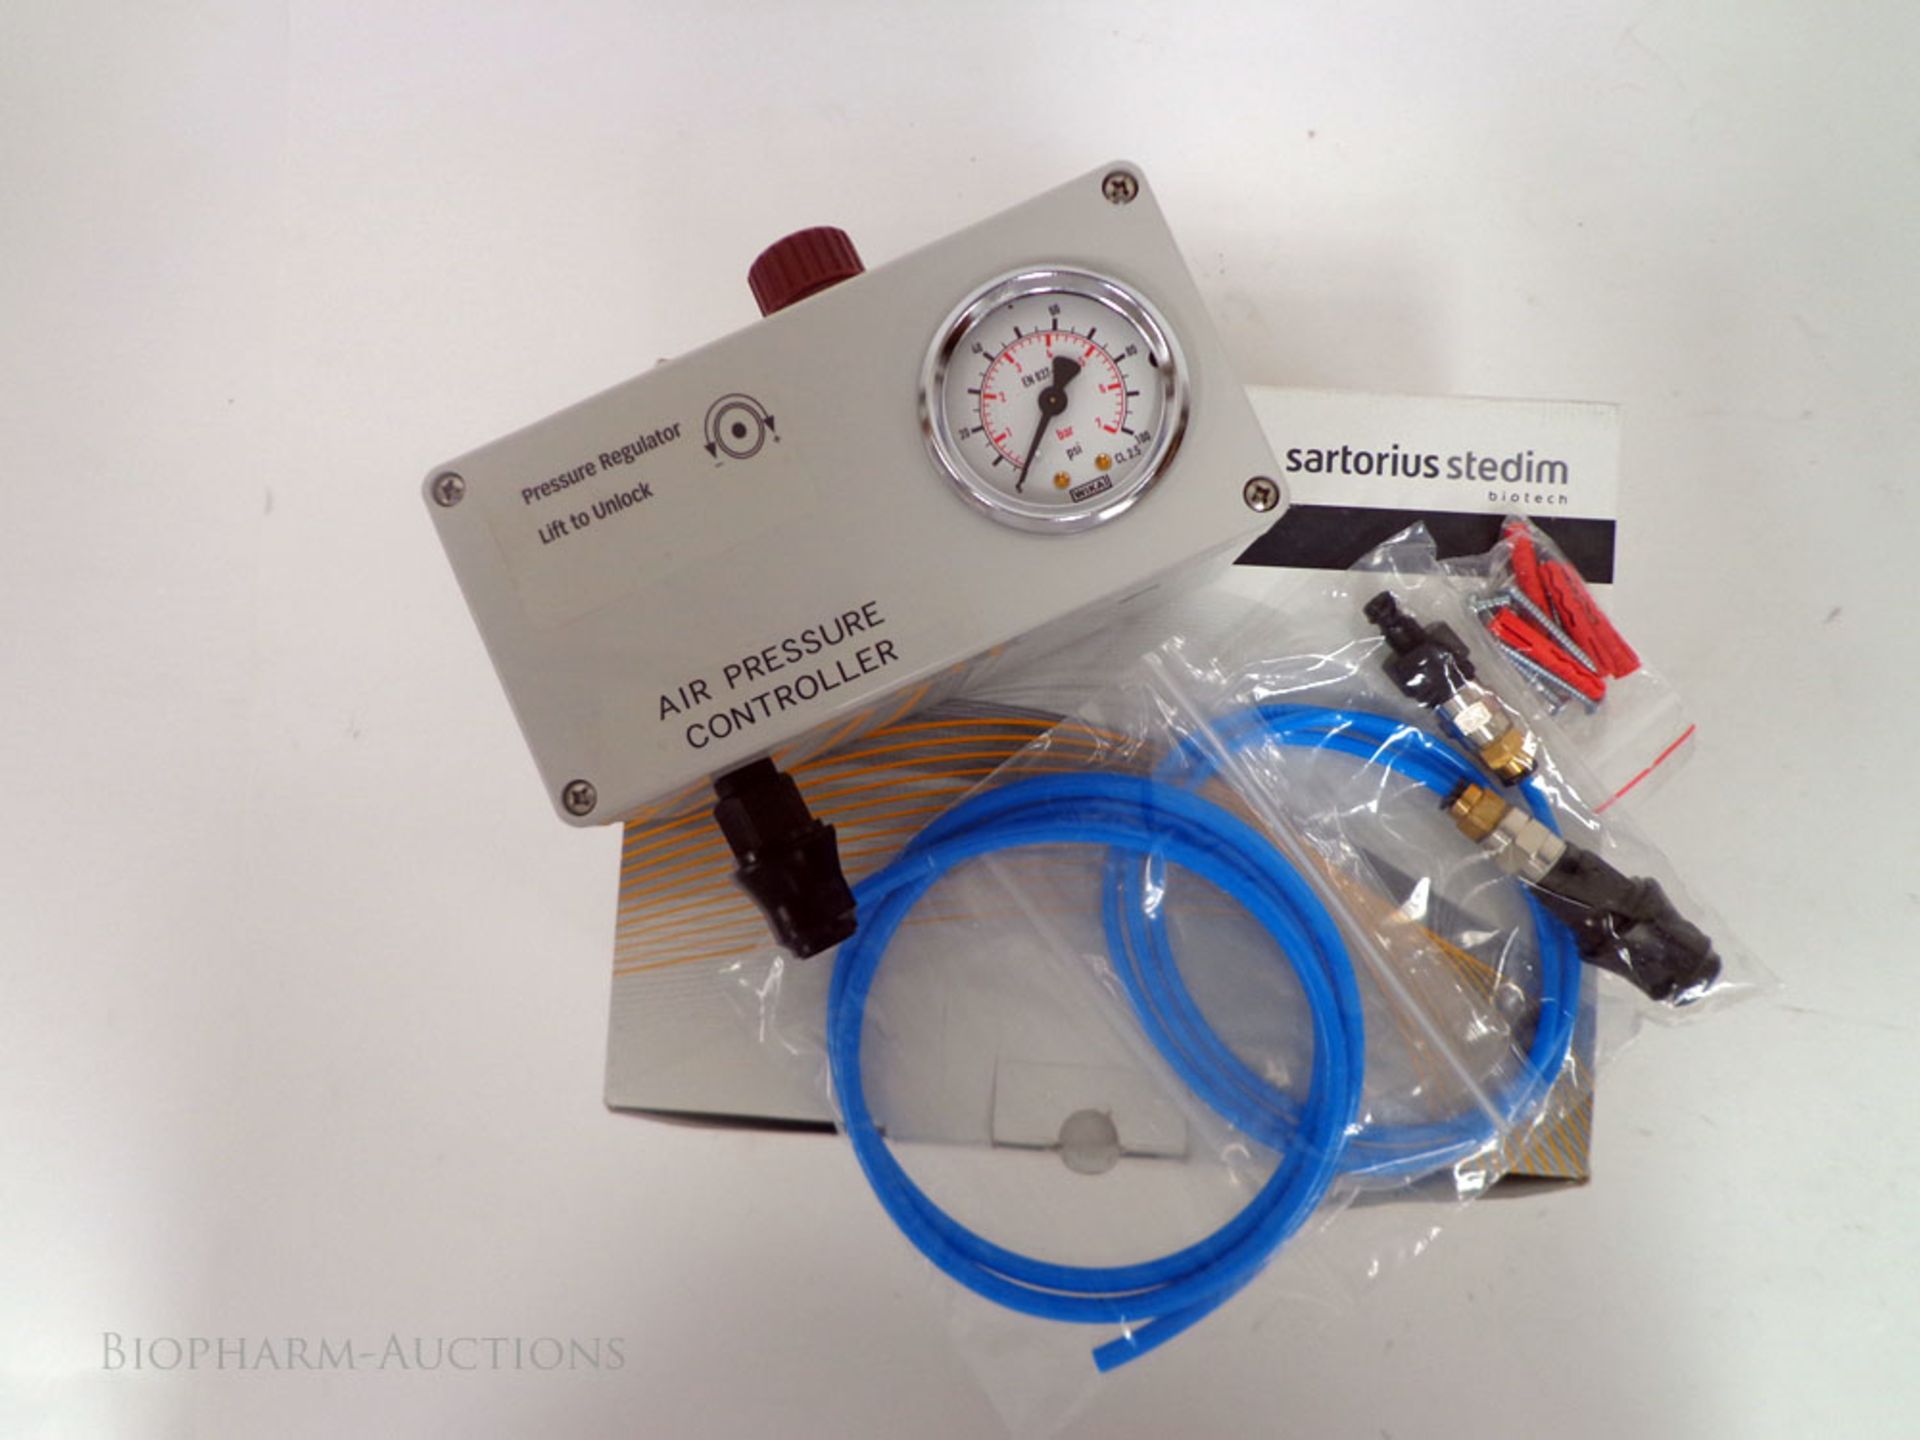 Sartorius stedim air pressure controller. Air pressure controller (APC), complete with pressure